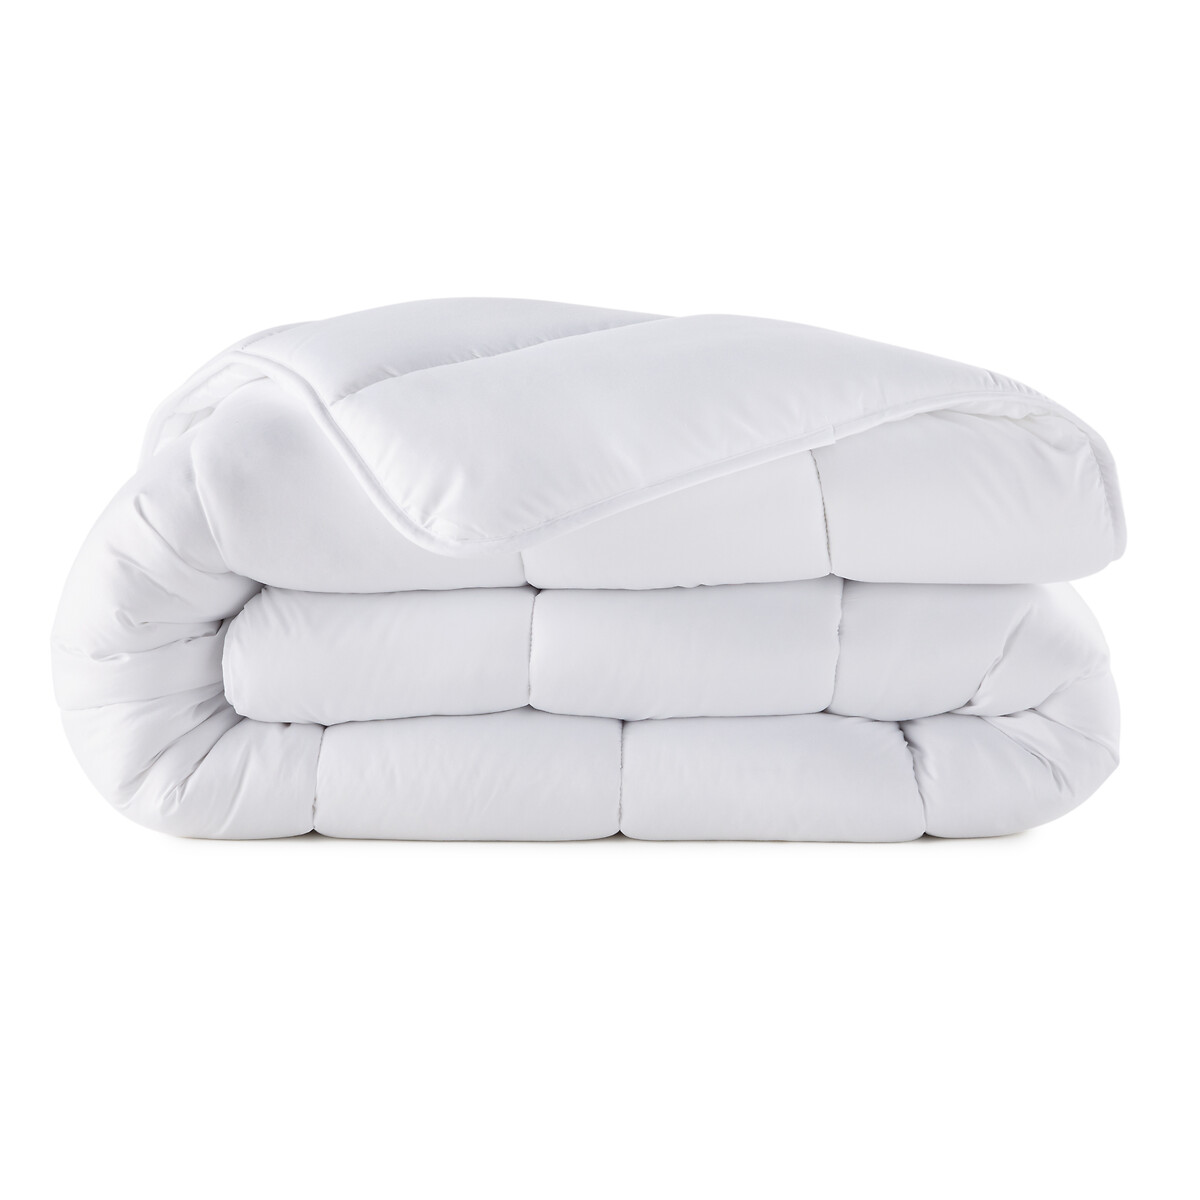 Одеяло синтетическое легкое 175 гм 100 полиэстер  160 x 210 см белый LaRedoute, размер 160 x 210 см - фото 2